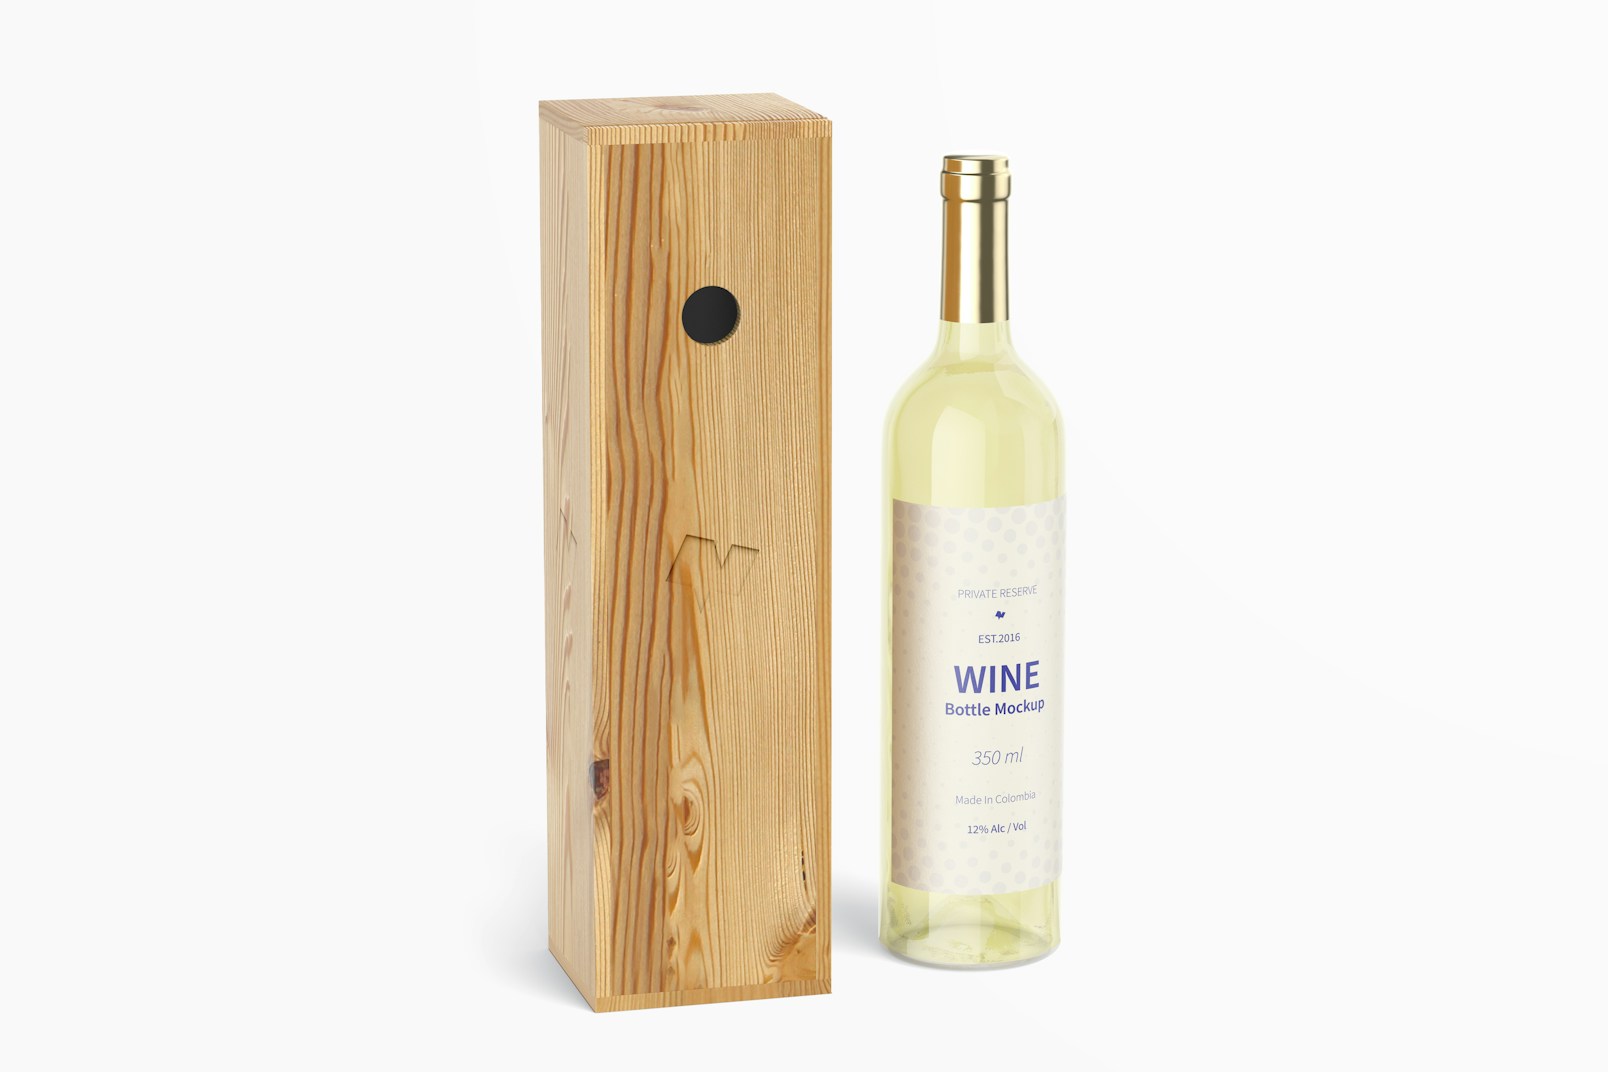 350ml Wine Bottle Mockup with Wood Box